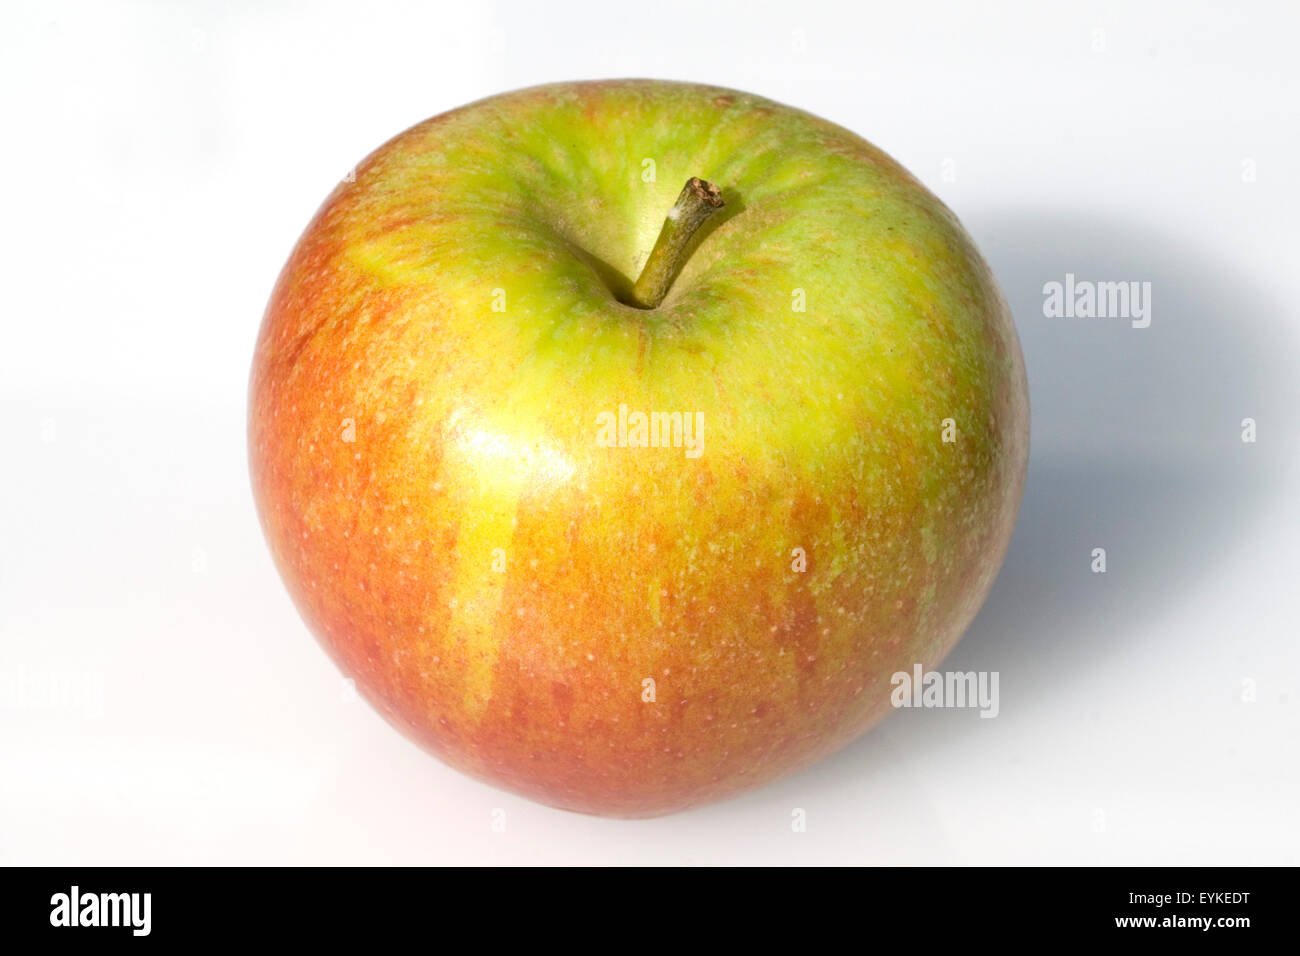 Cox Orange; Apfel; Malus domestica, Apfelsorte, Apfel, Kernobst, Obst, Stock Photo